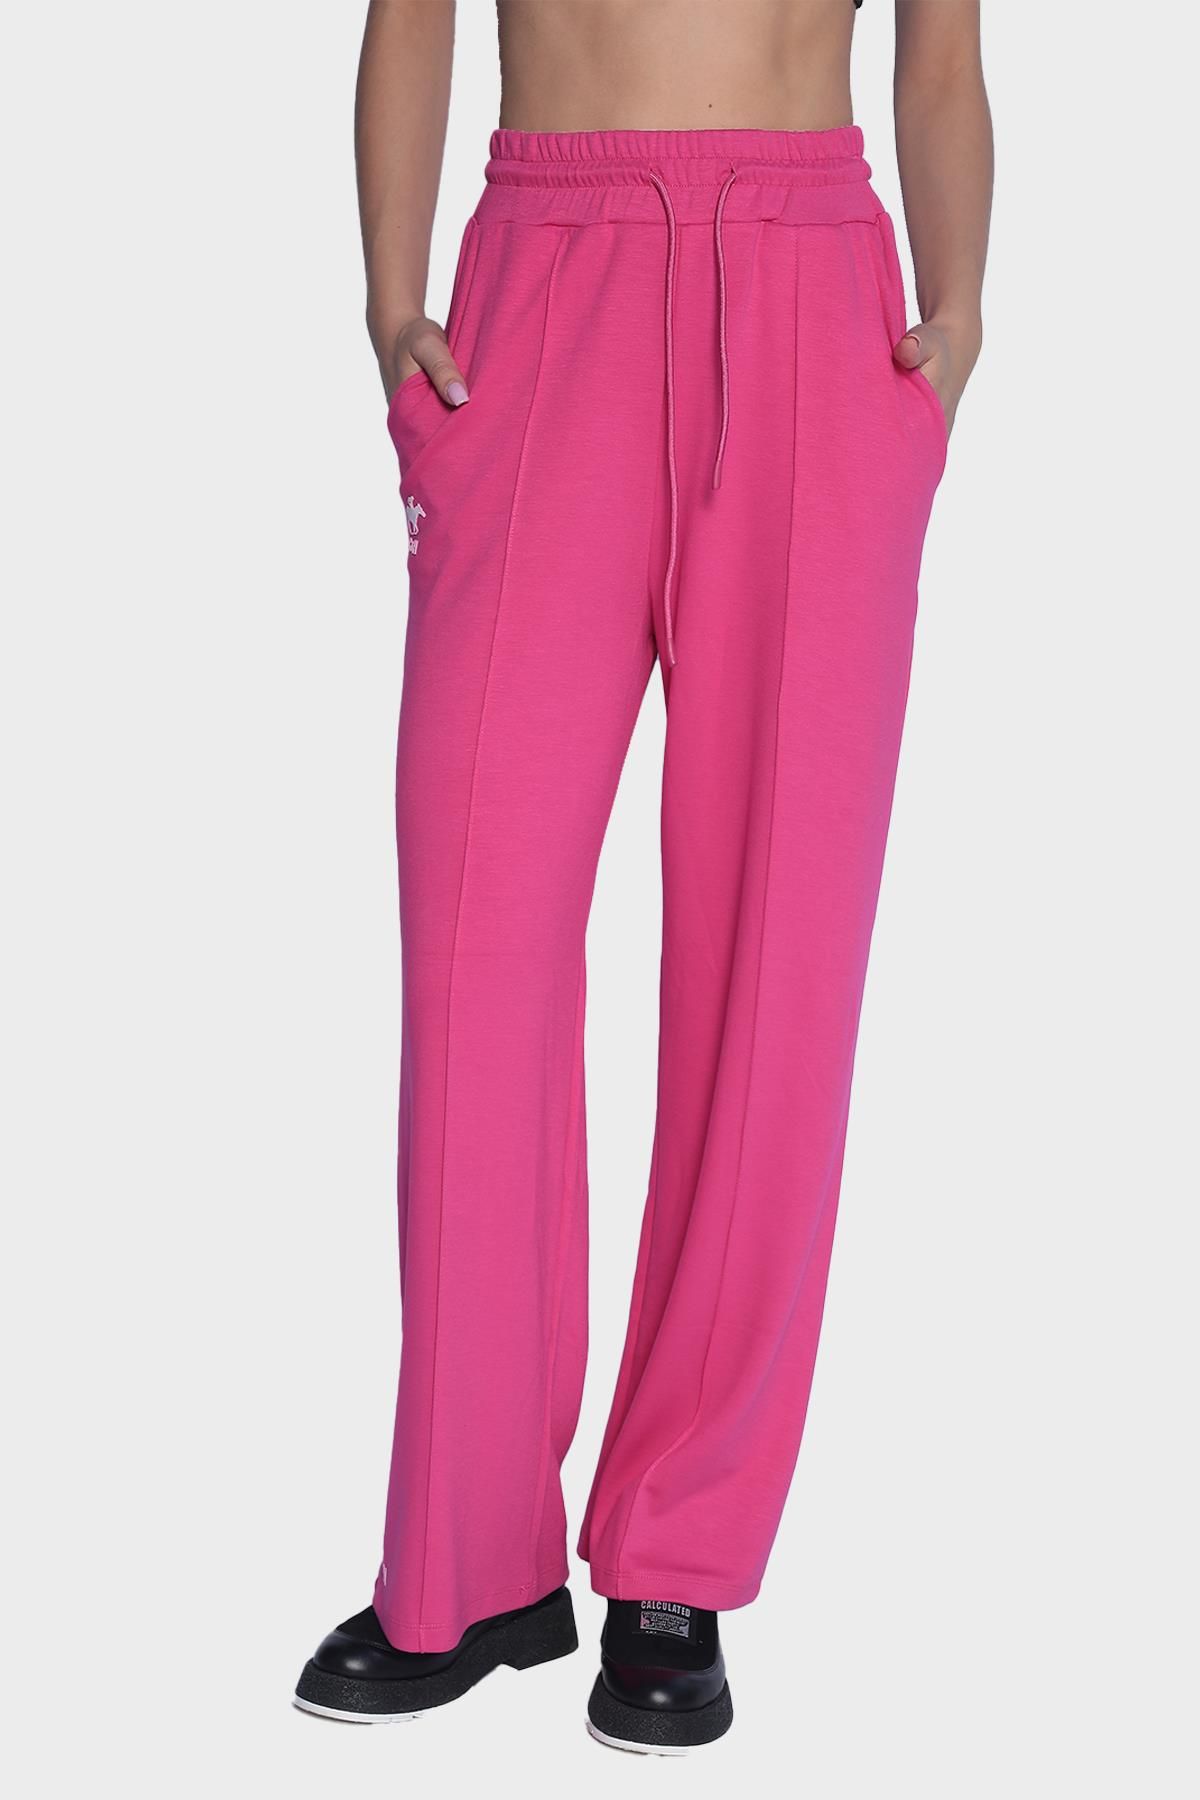 Женские спортивные штаны на резинке с широким карманом на талии - Fuchsia